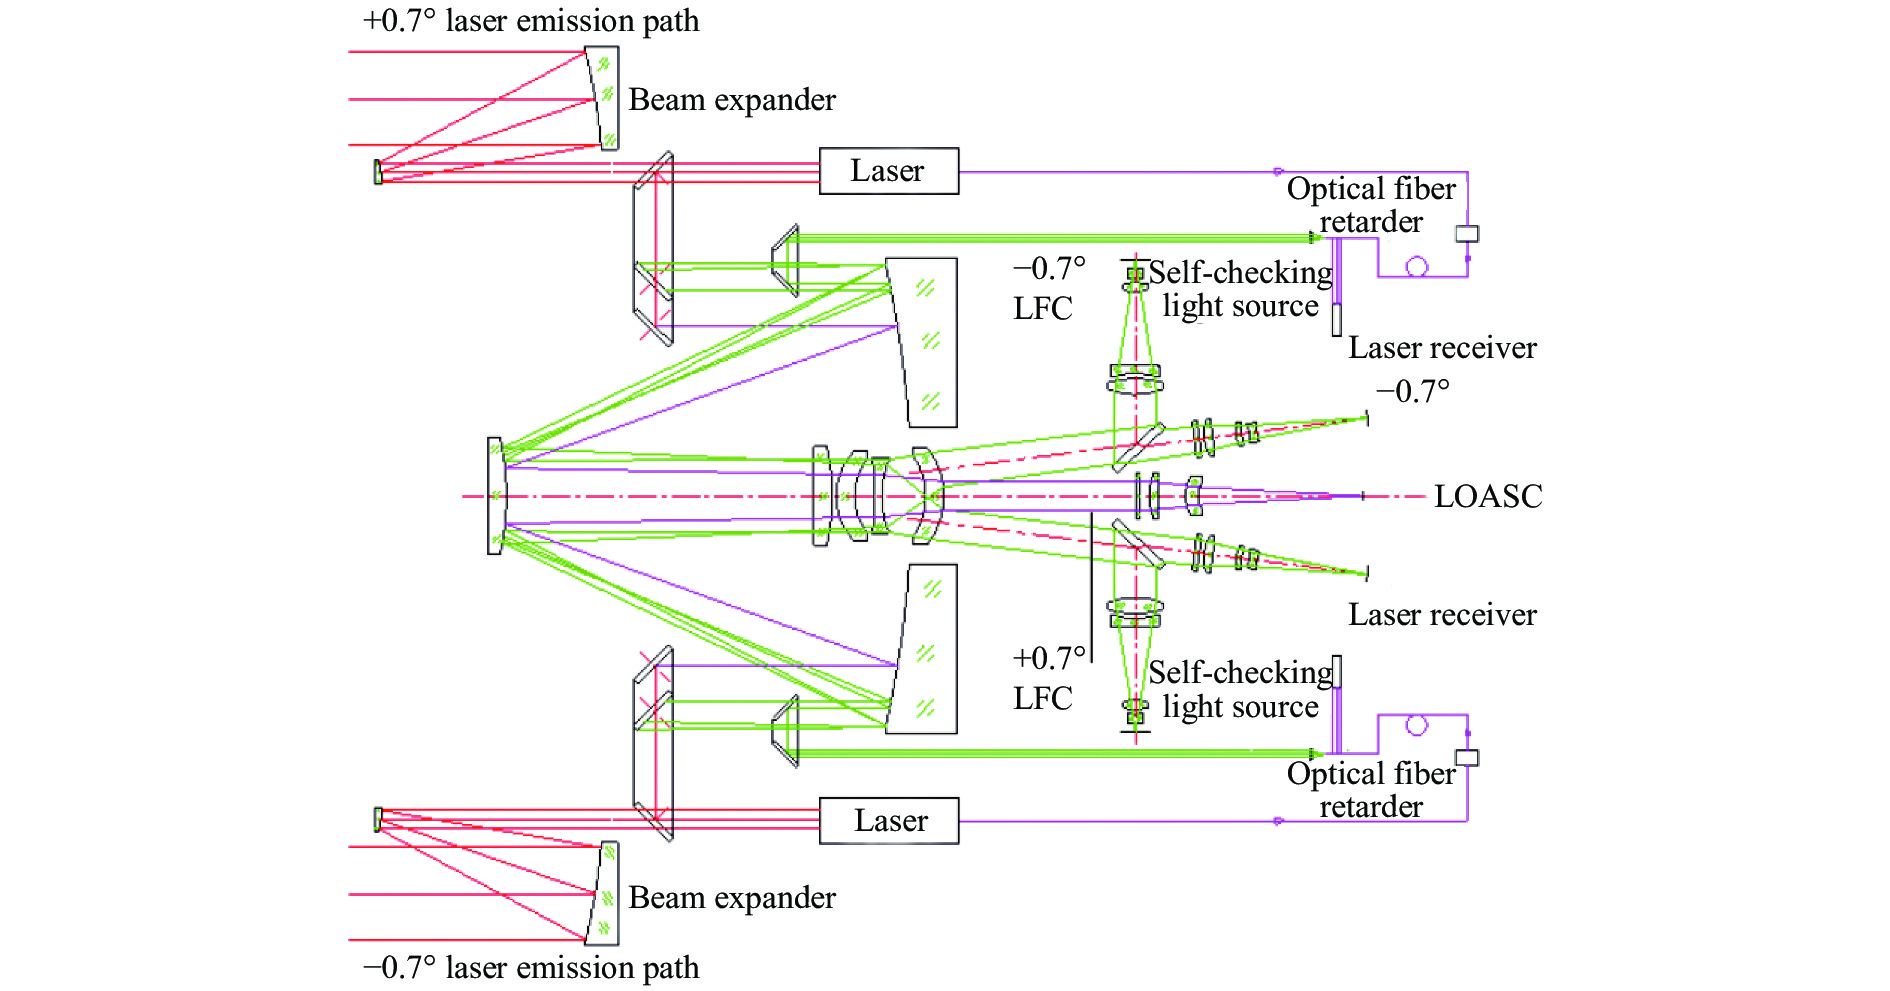 Imaging mechanism of LFC and LOASC